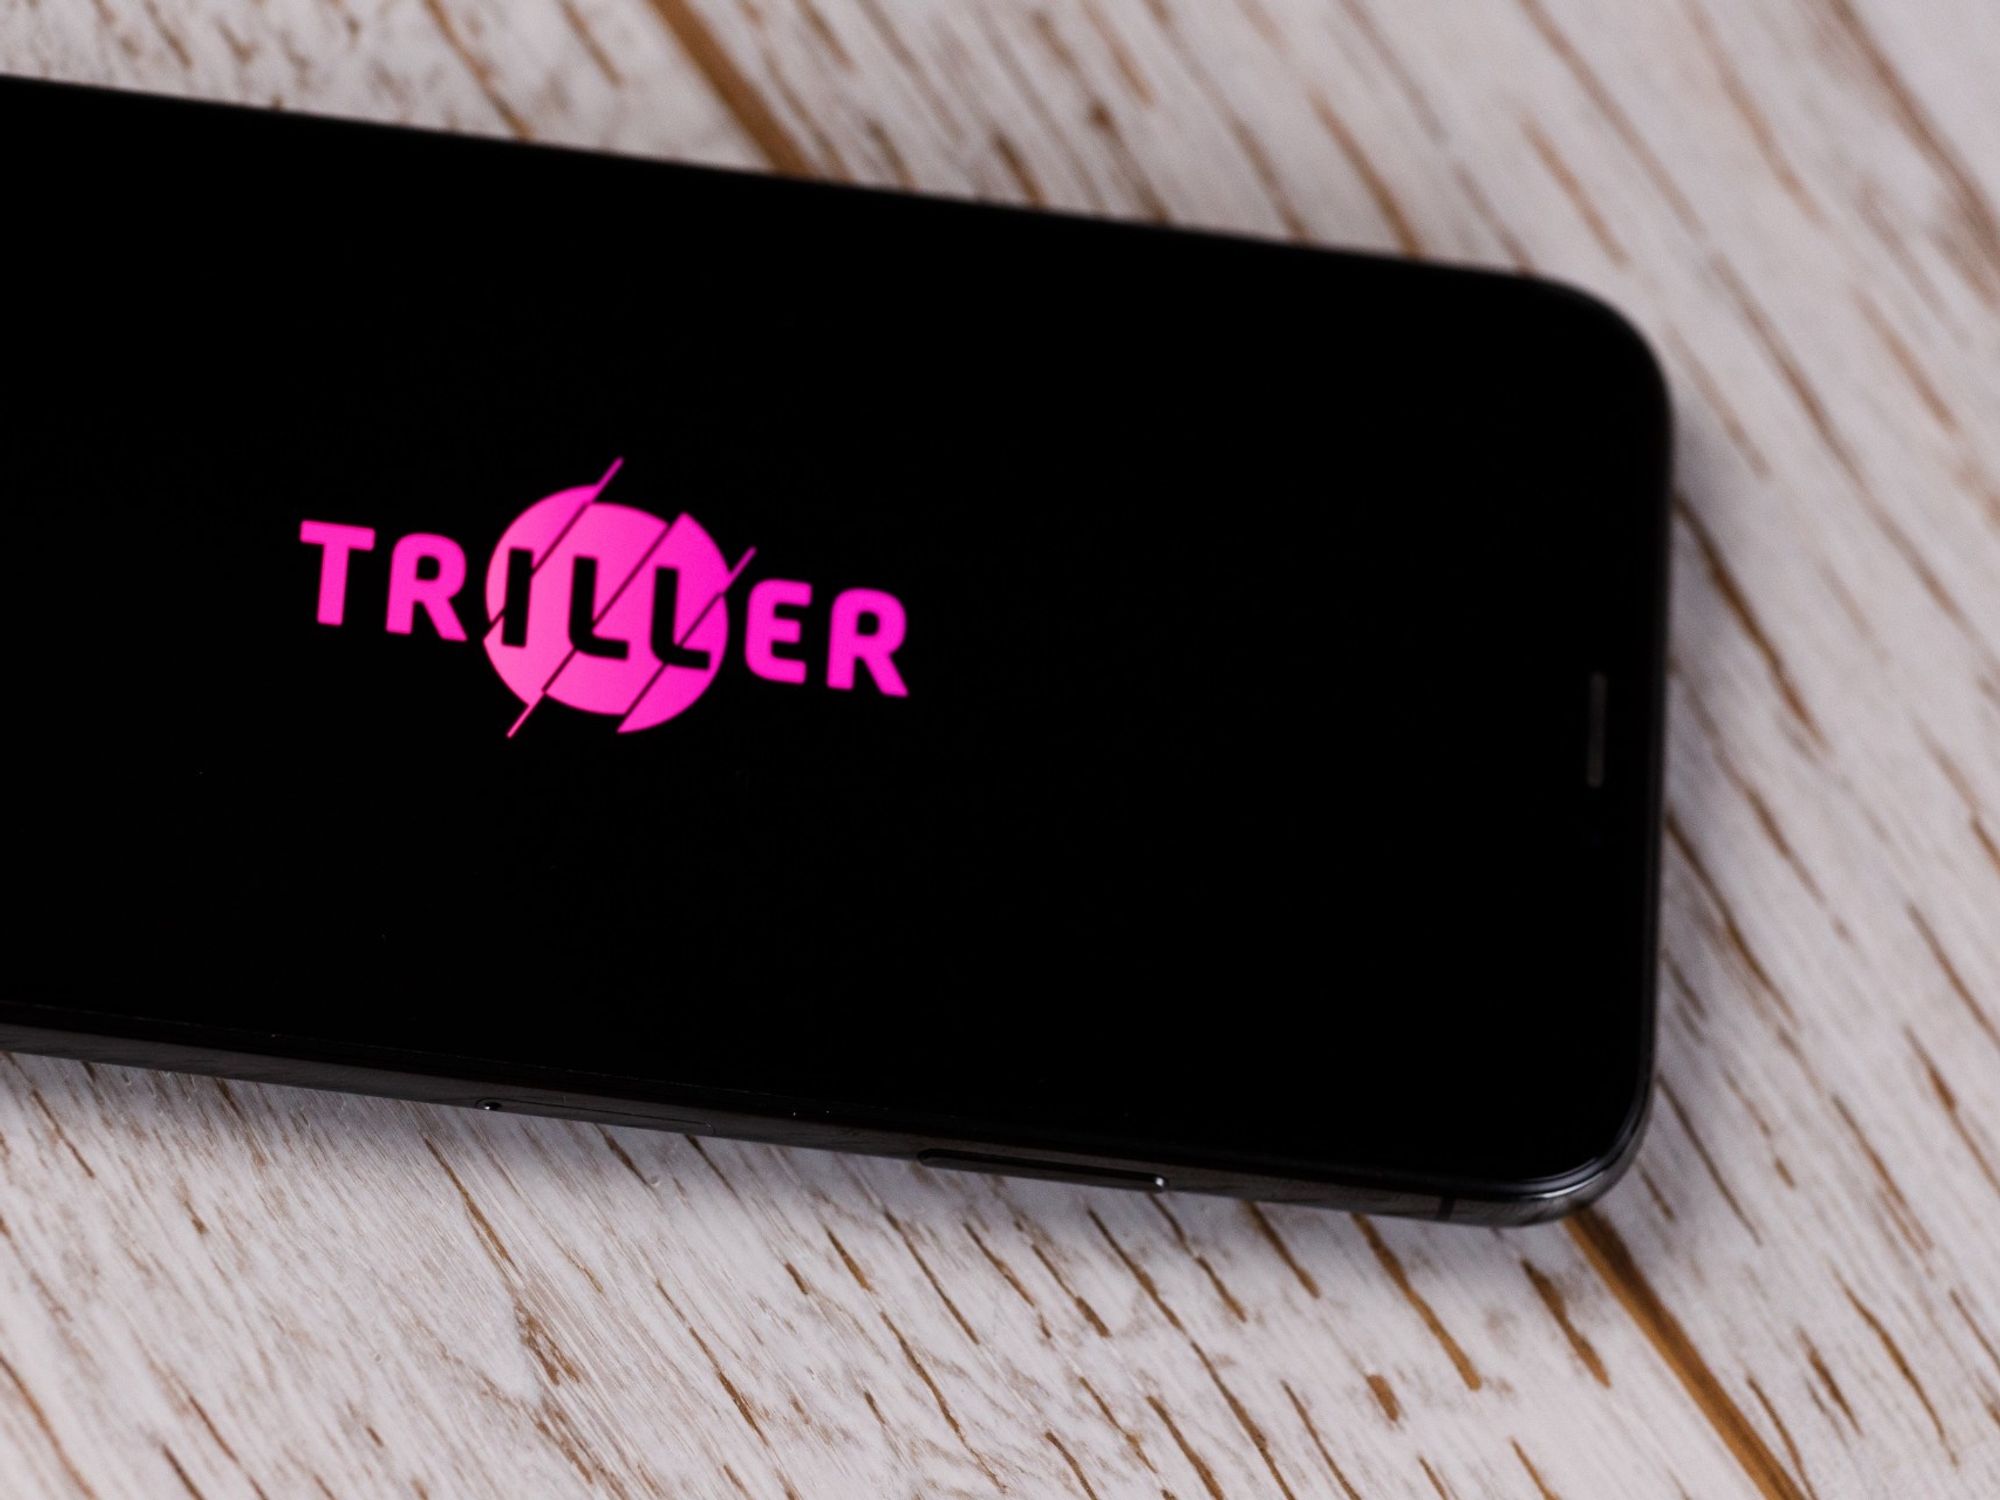 Exclusive: Short-video company Triller launches metaverse platform